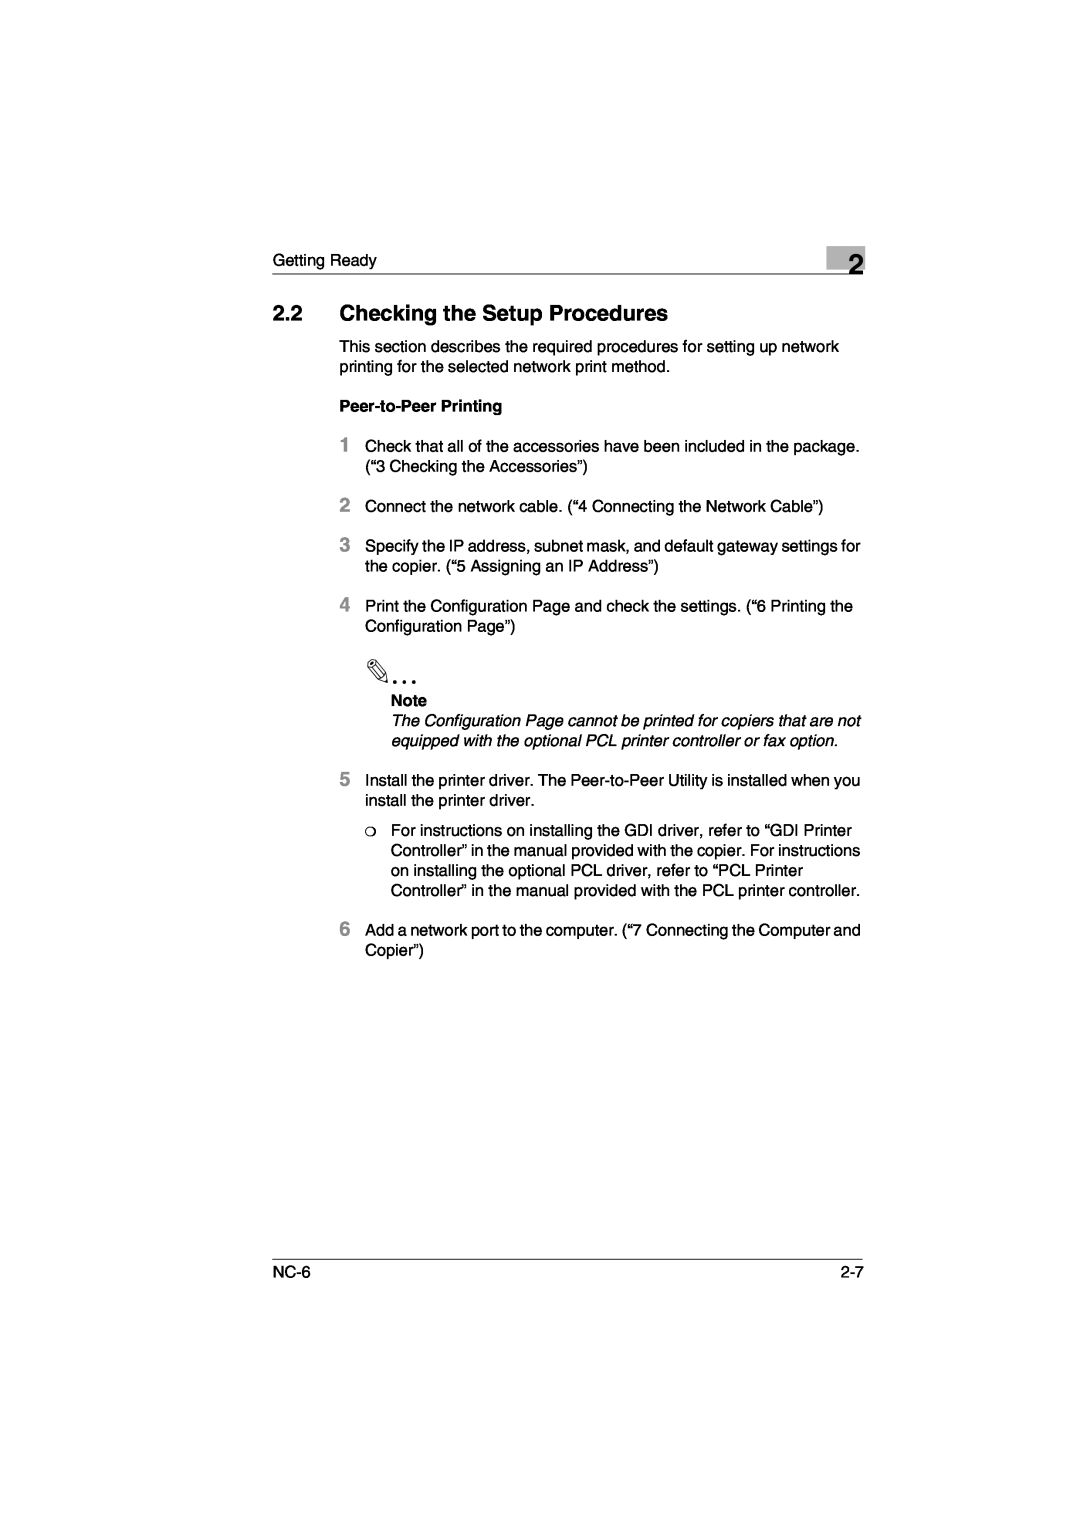 Konica Minolta NC-6 user manual Checking the Setup Procedures 